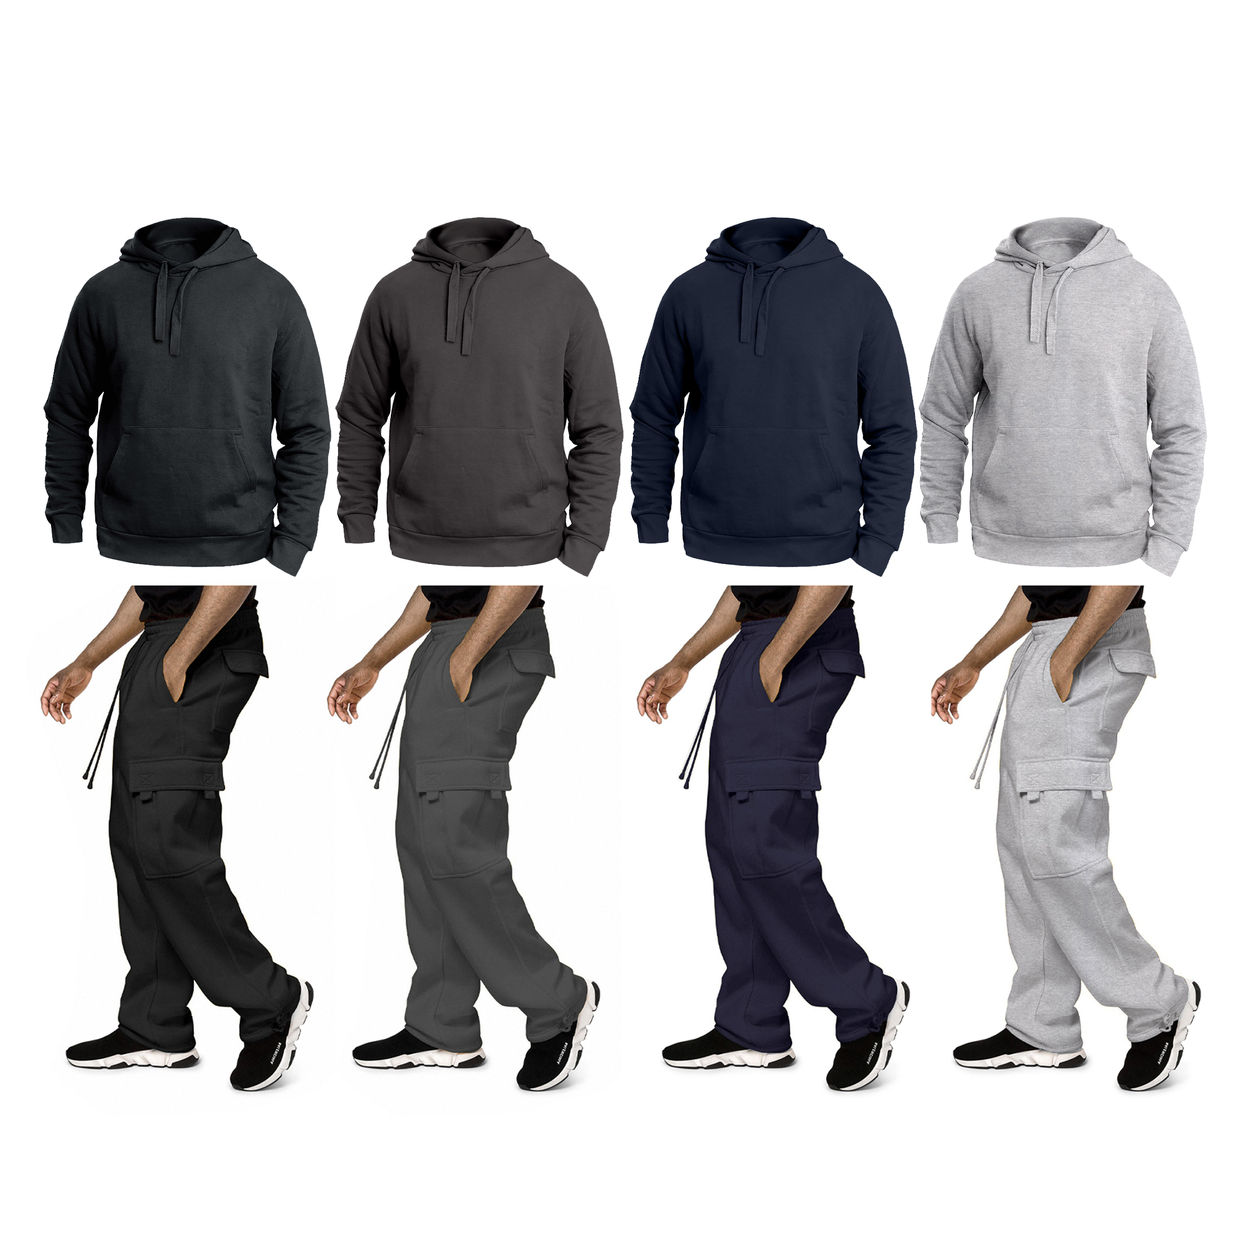 Multi-Pack: Big & Tall Men's Winter Warm Cozy Athletic Fleece Lined Multi-Pocket Cargo Sweatsuit - Grey, 2-pack, Small